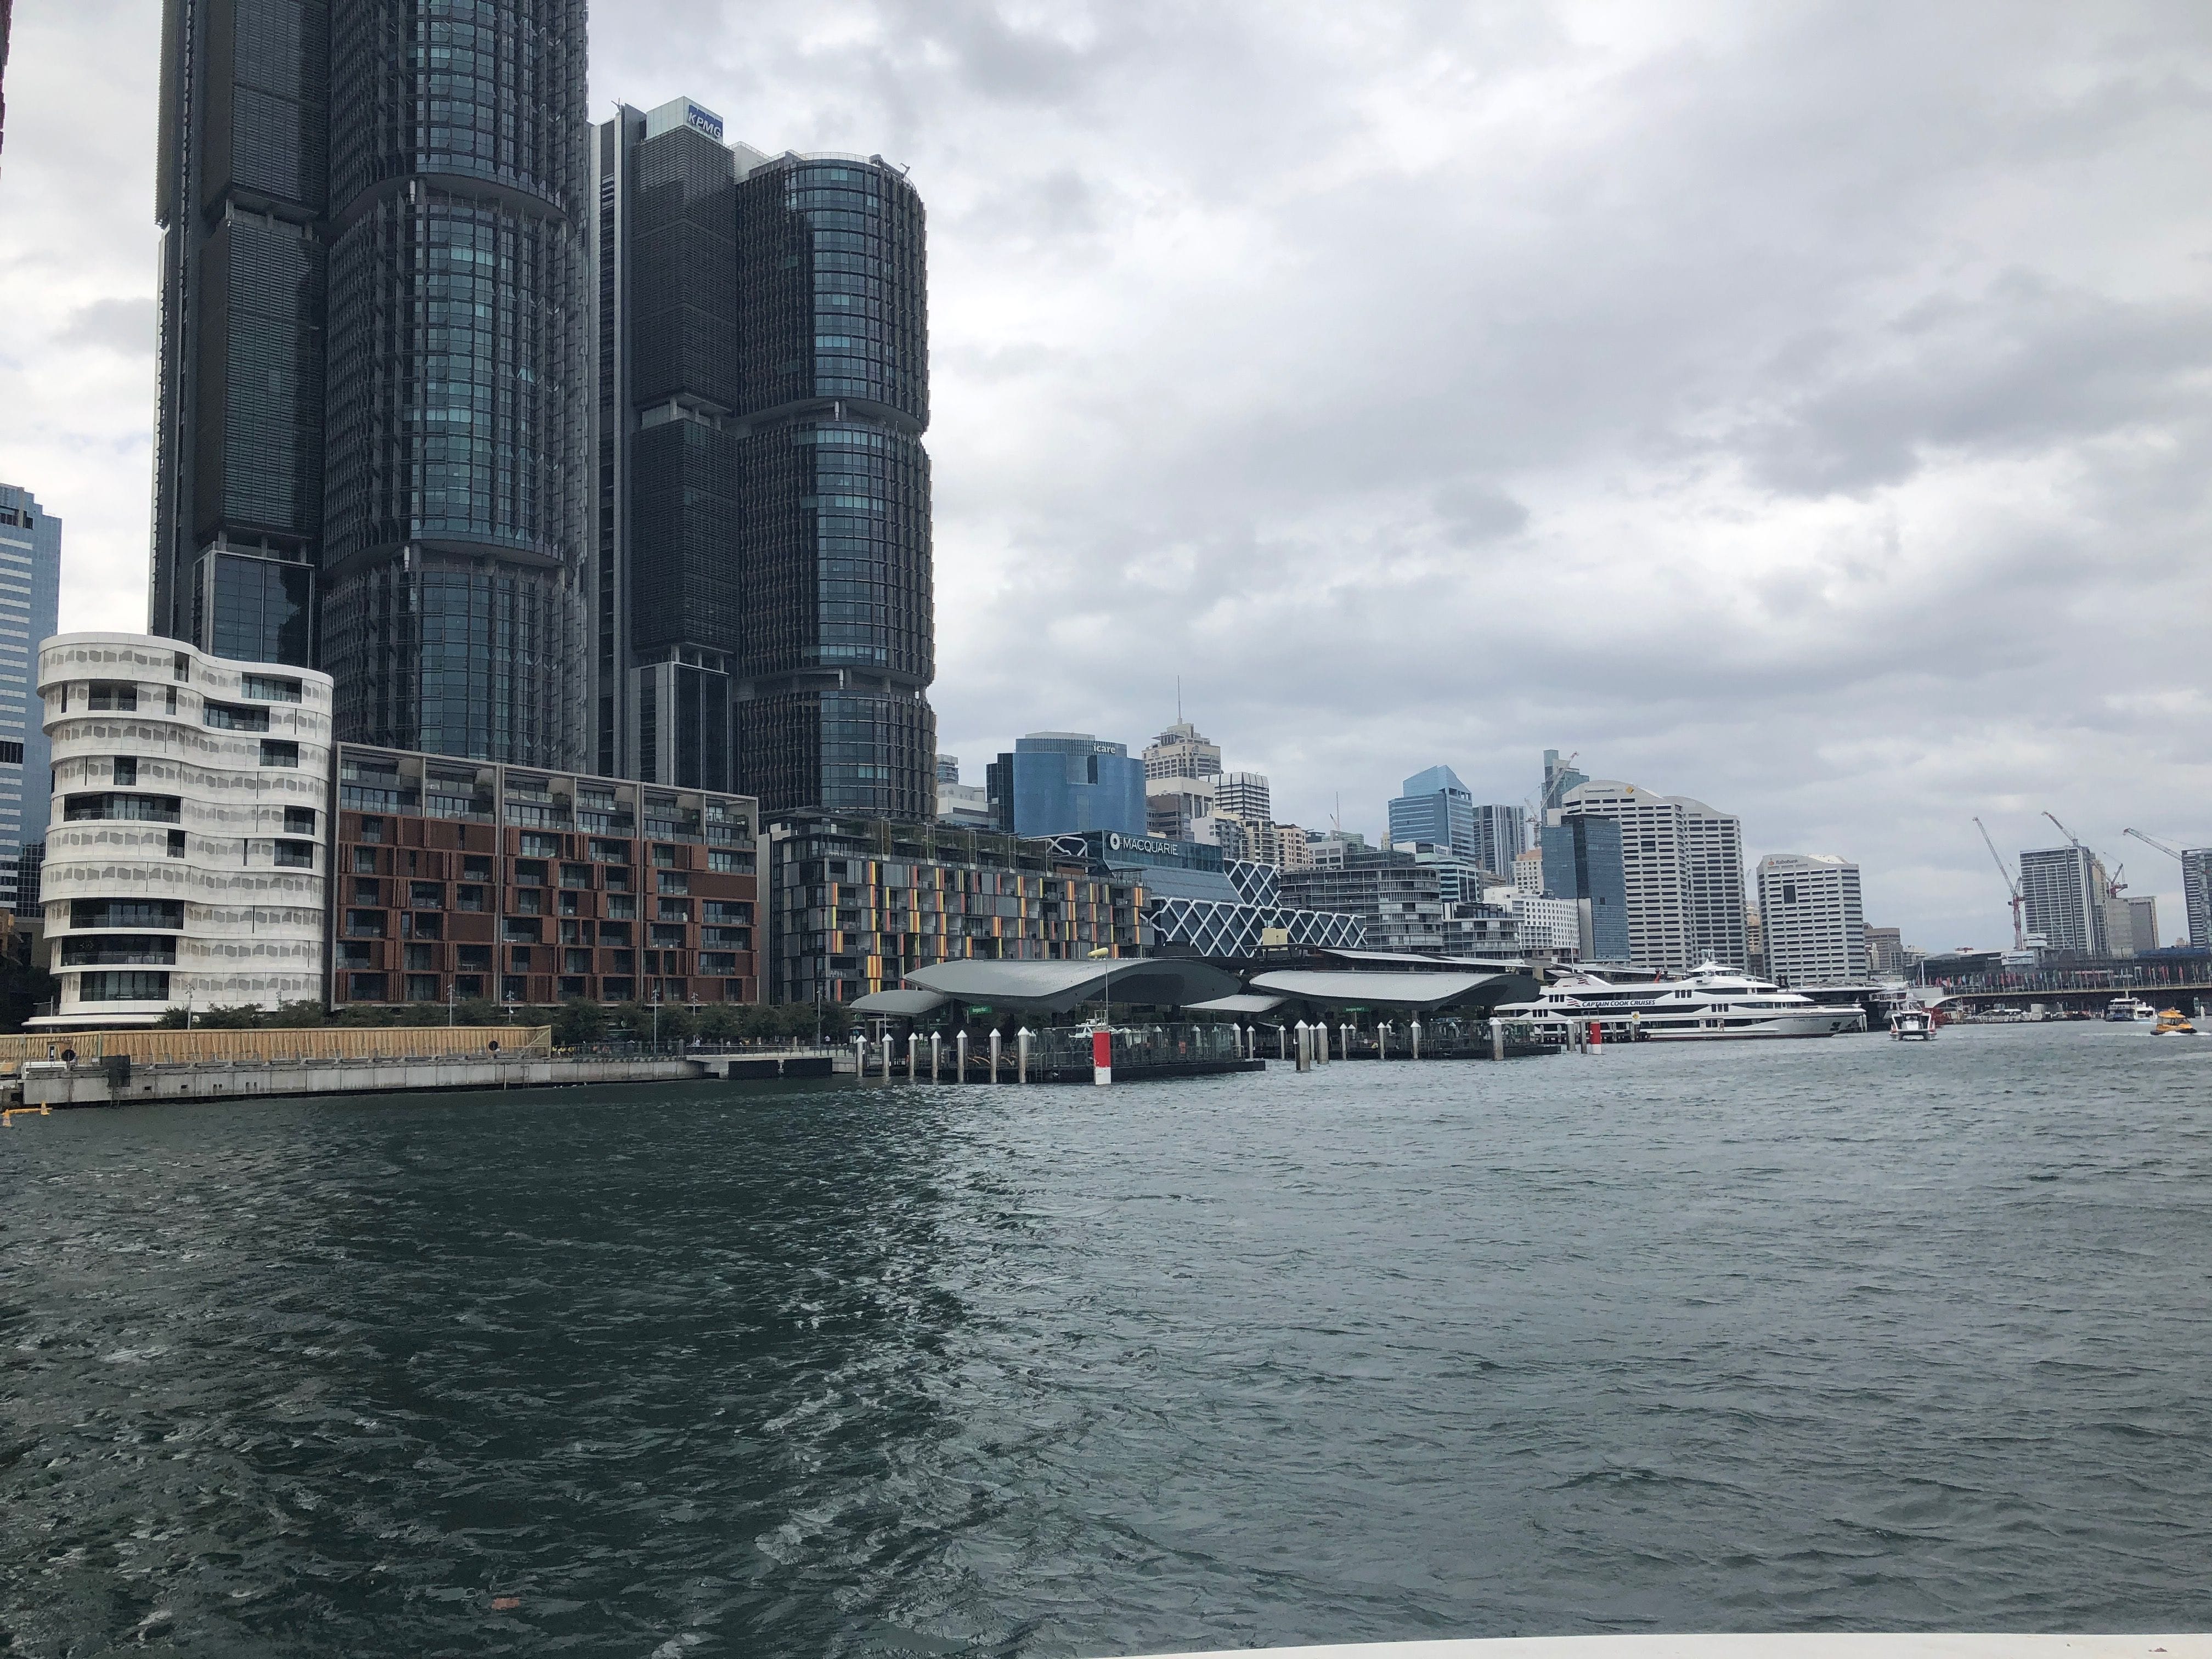 Parramatta River cruise & Cockatoo Island March 2019 Image -5c8d872e5eb4d